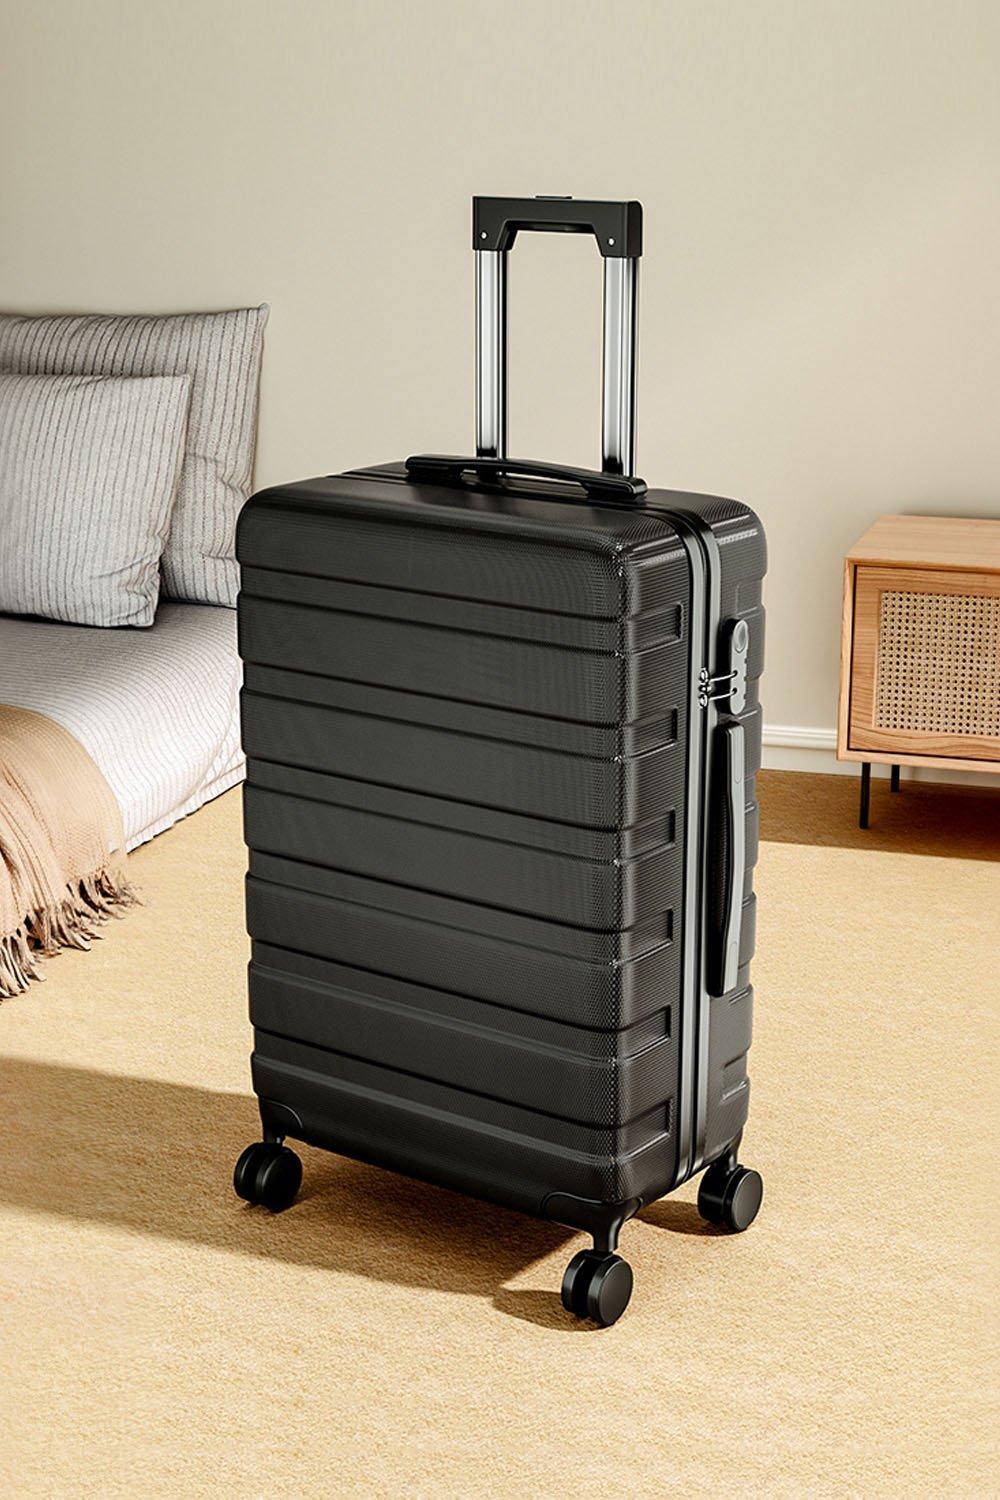 Hardshell Rolling Luggage Trolley Travel Case, 28